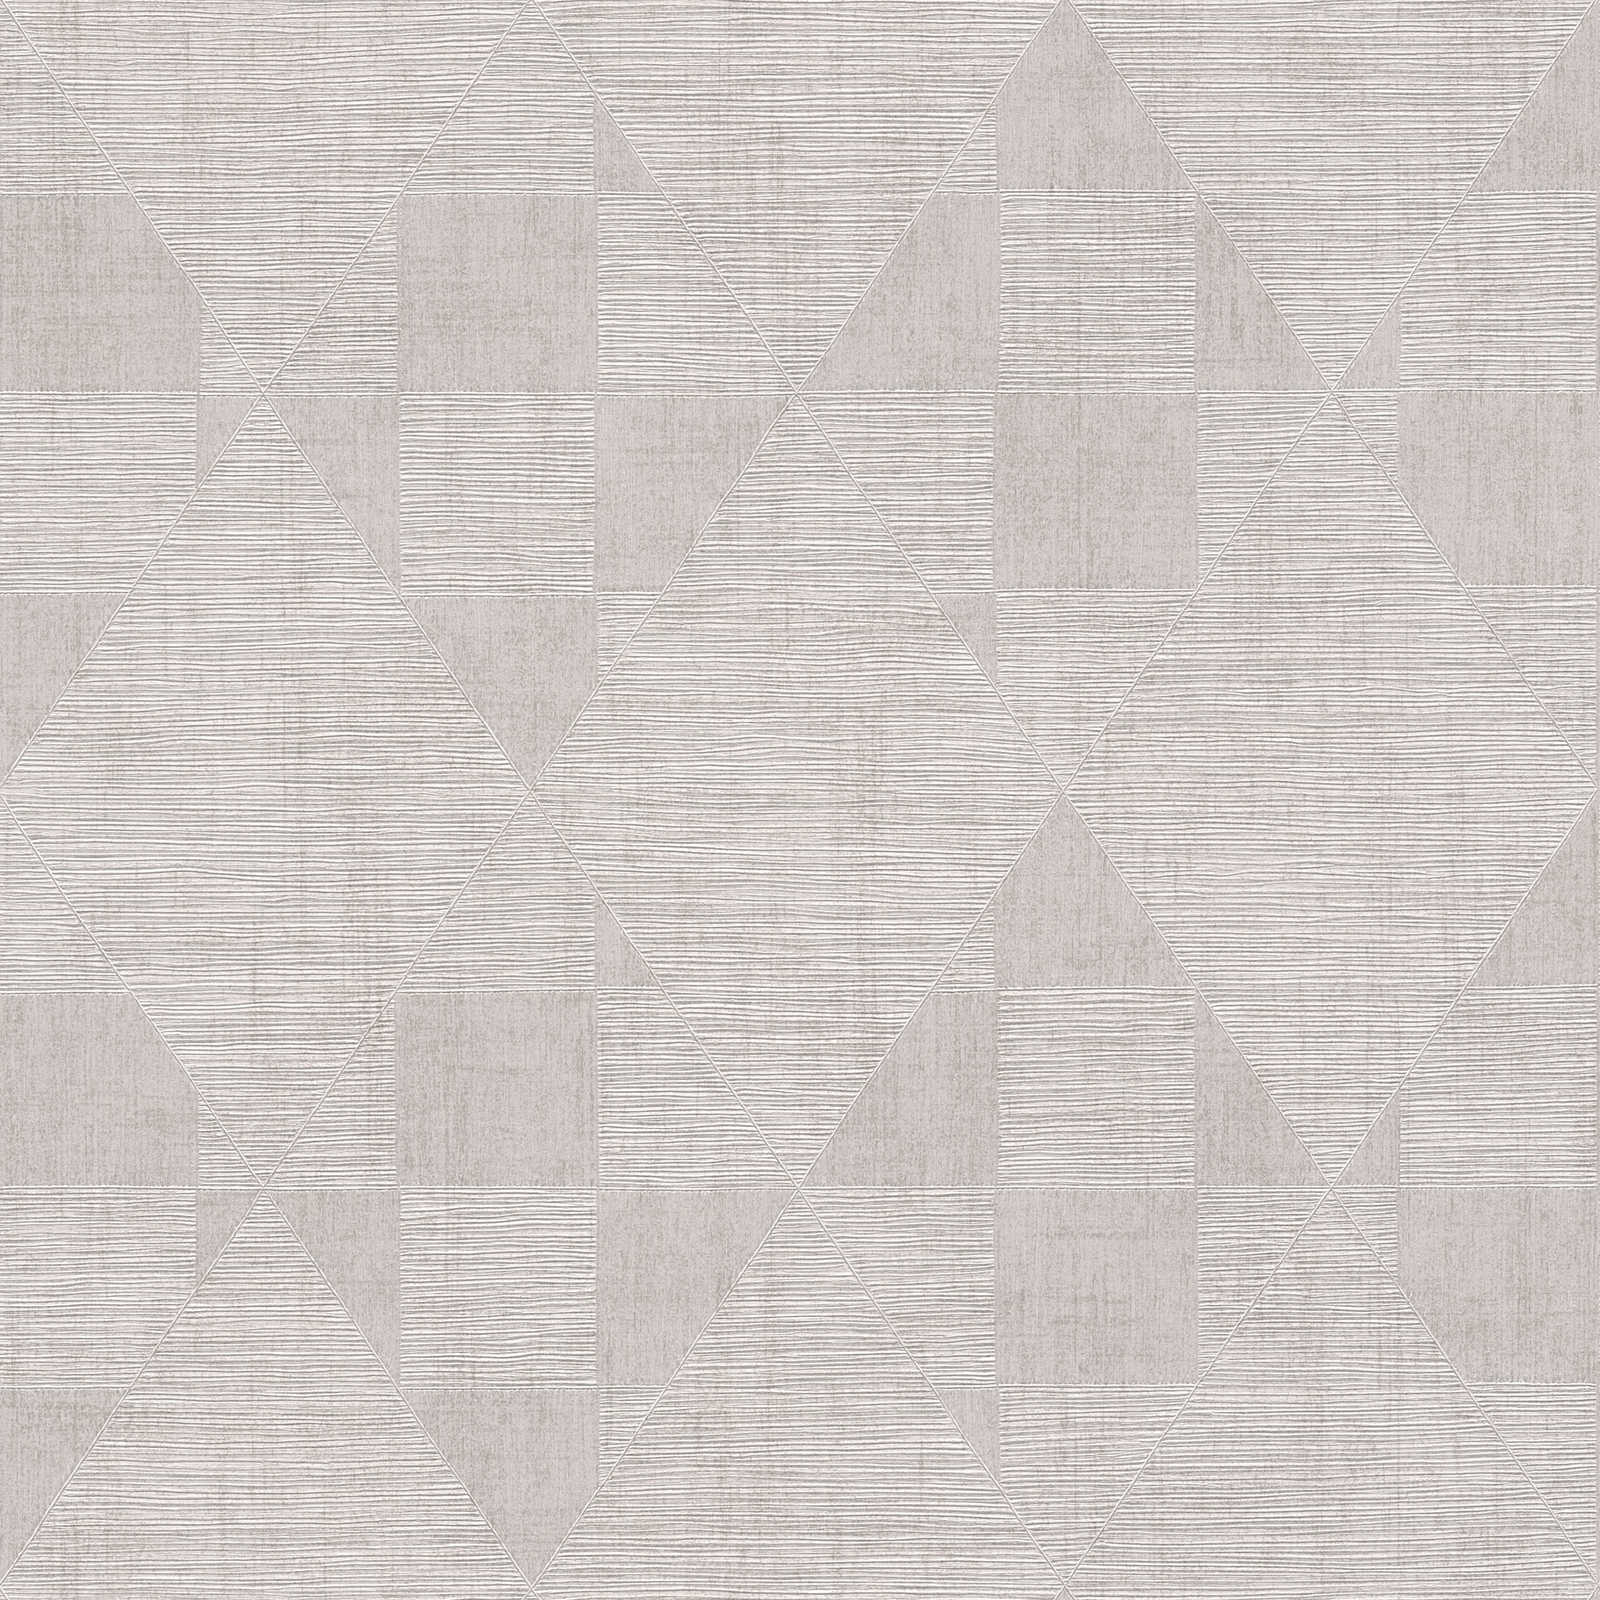             Metallic wallpaper with retro pattern & texture effect - beige, brown
        